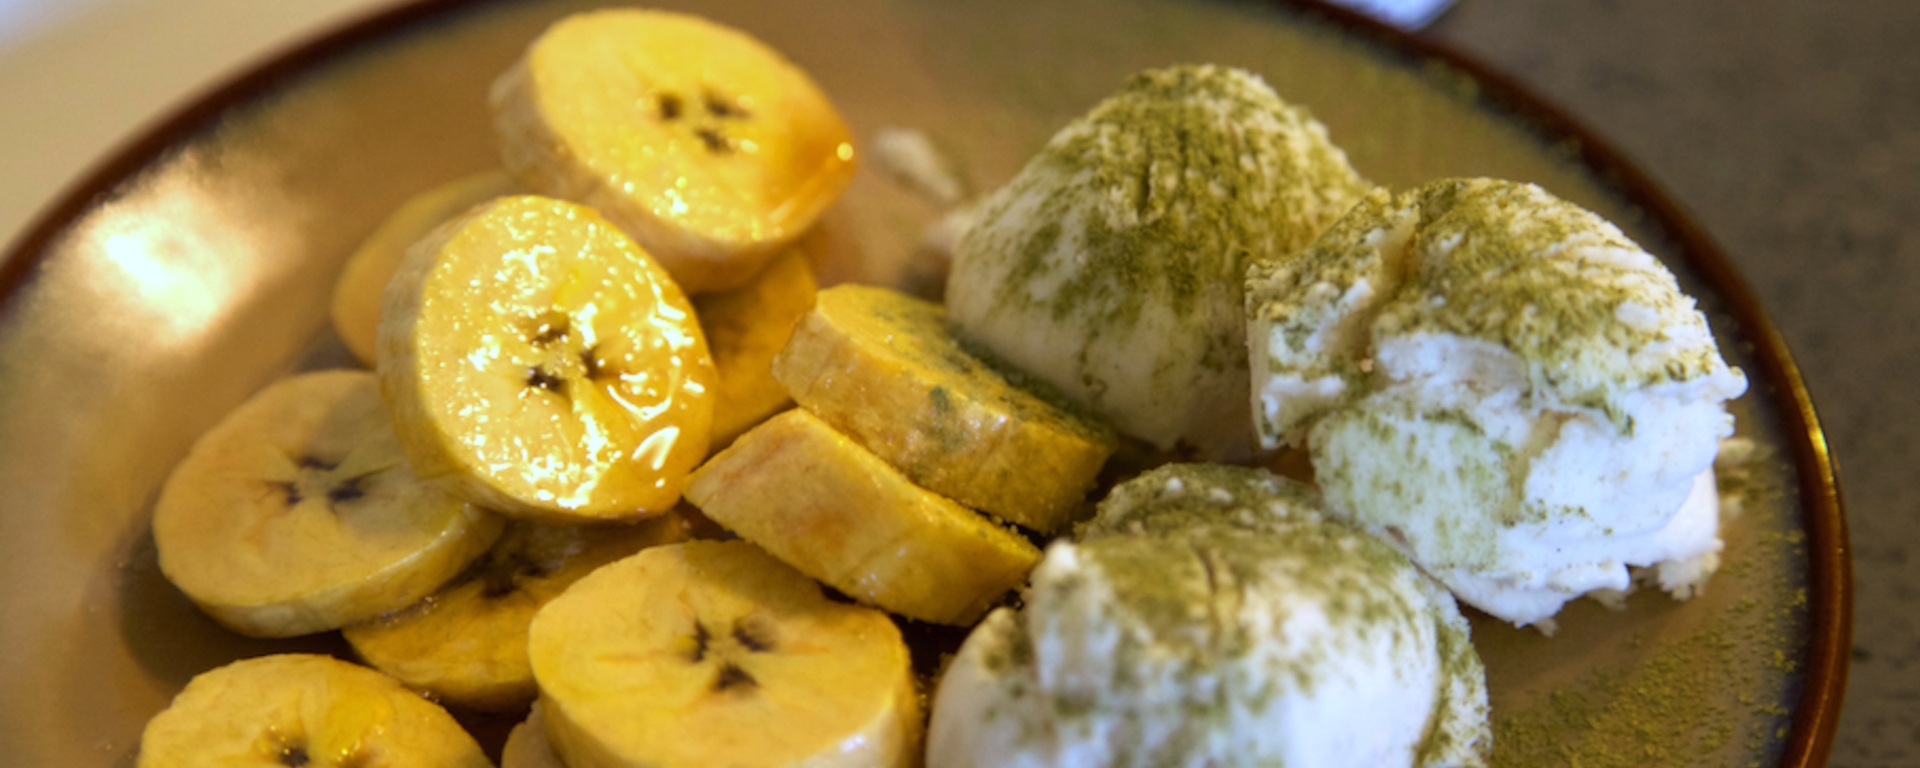 Hazelnut-Carmelized Plantains with Green Tea Salted Vanilla Ice Cream